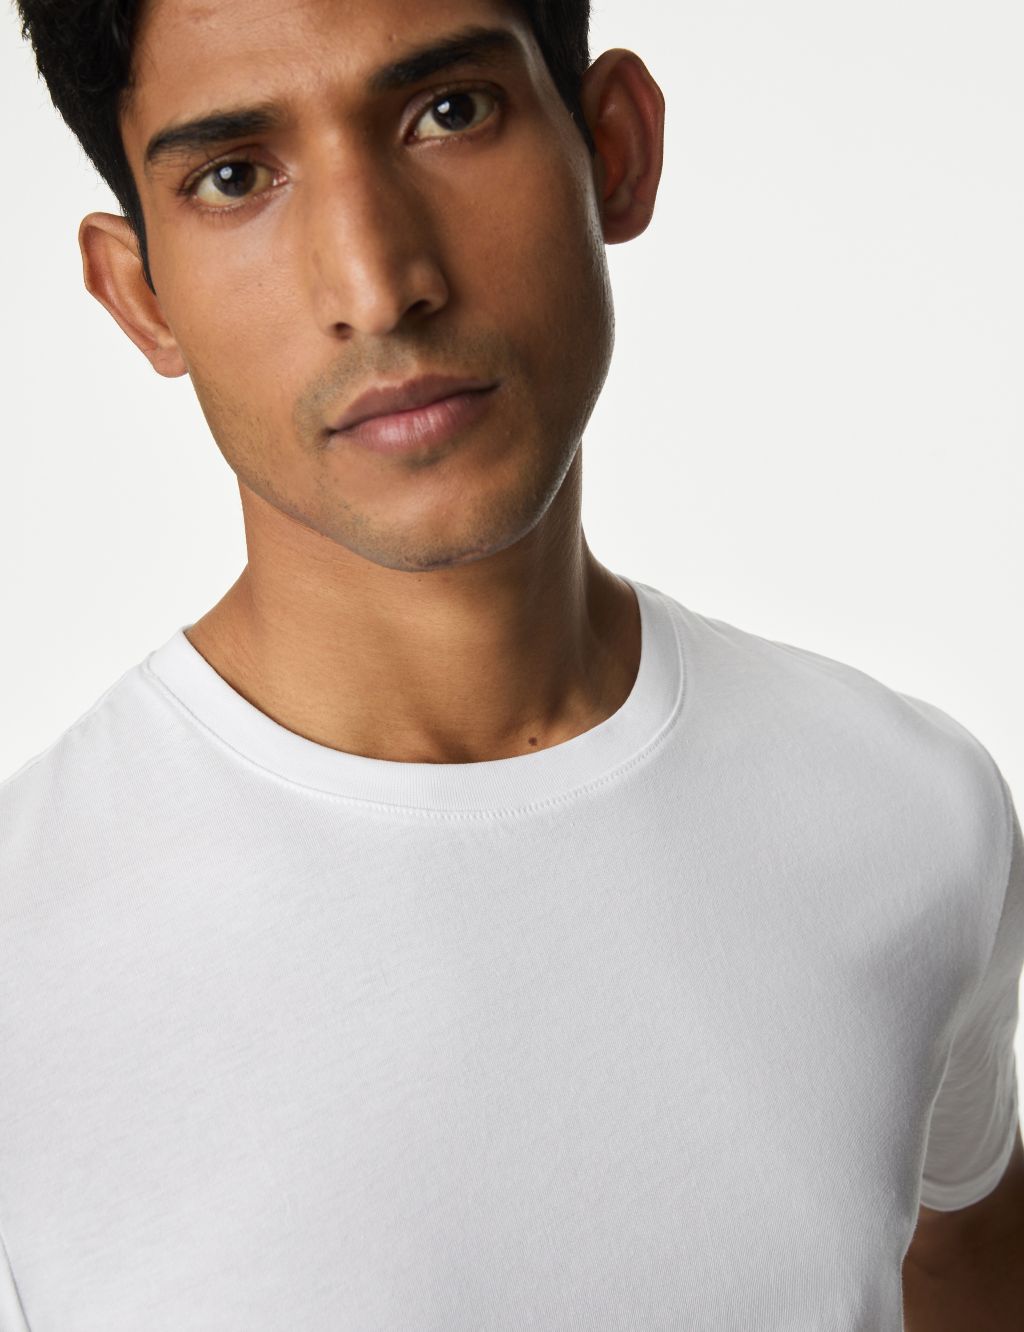 global jubilæum Tilgivende Men's White T-shirts | M&S